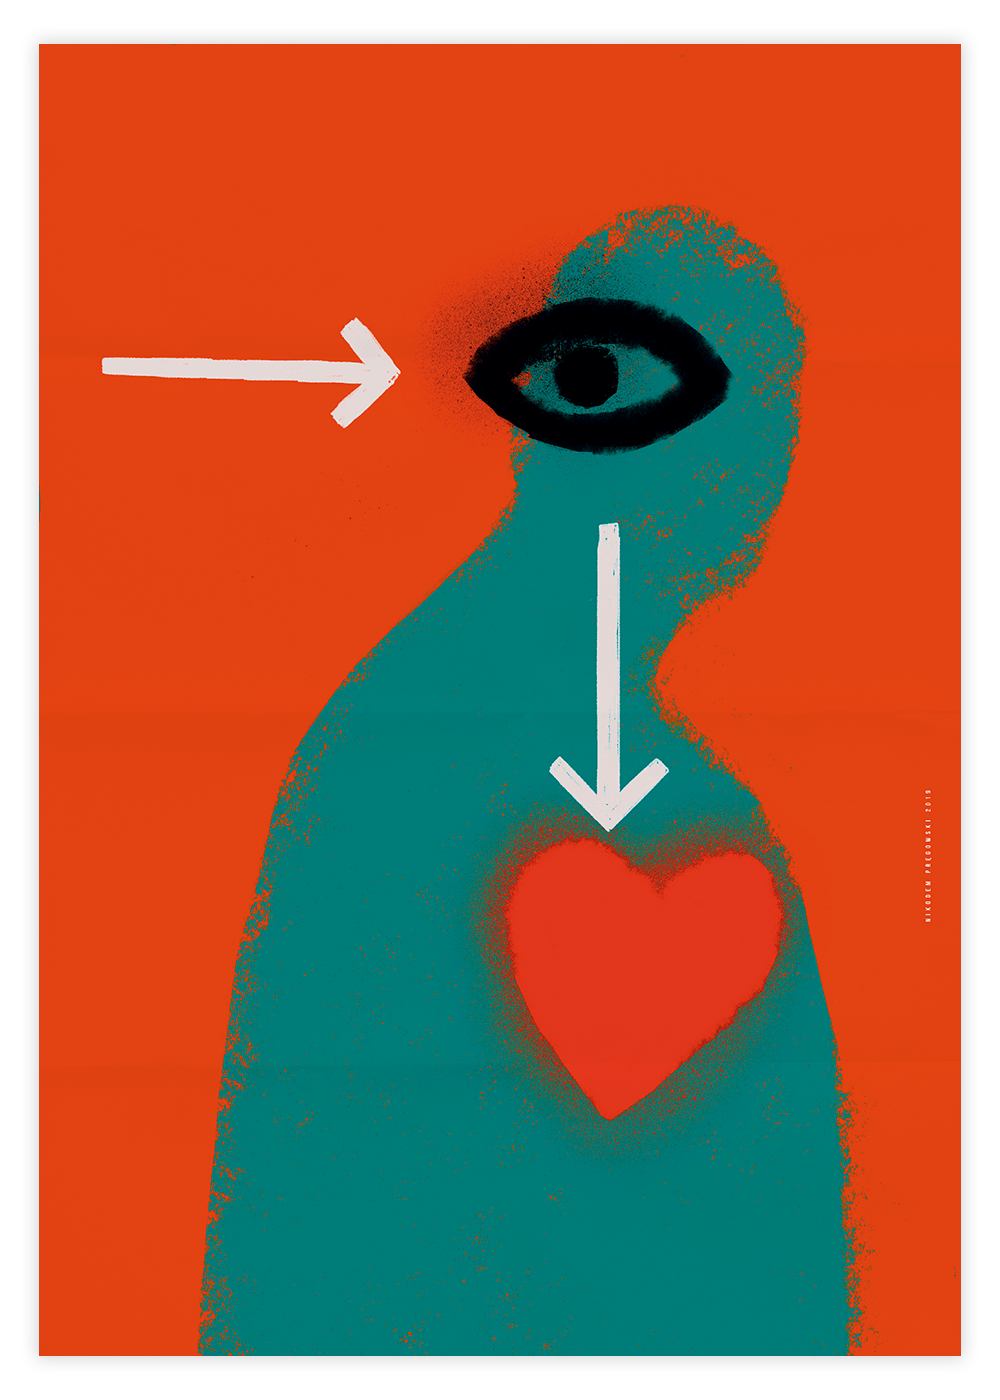 Plakat: "Design perception"